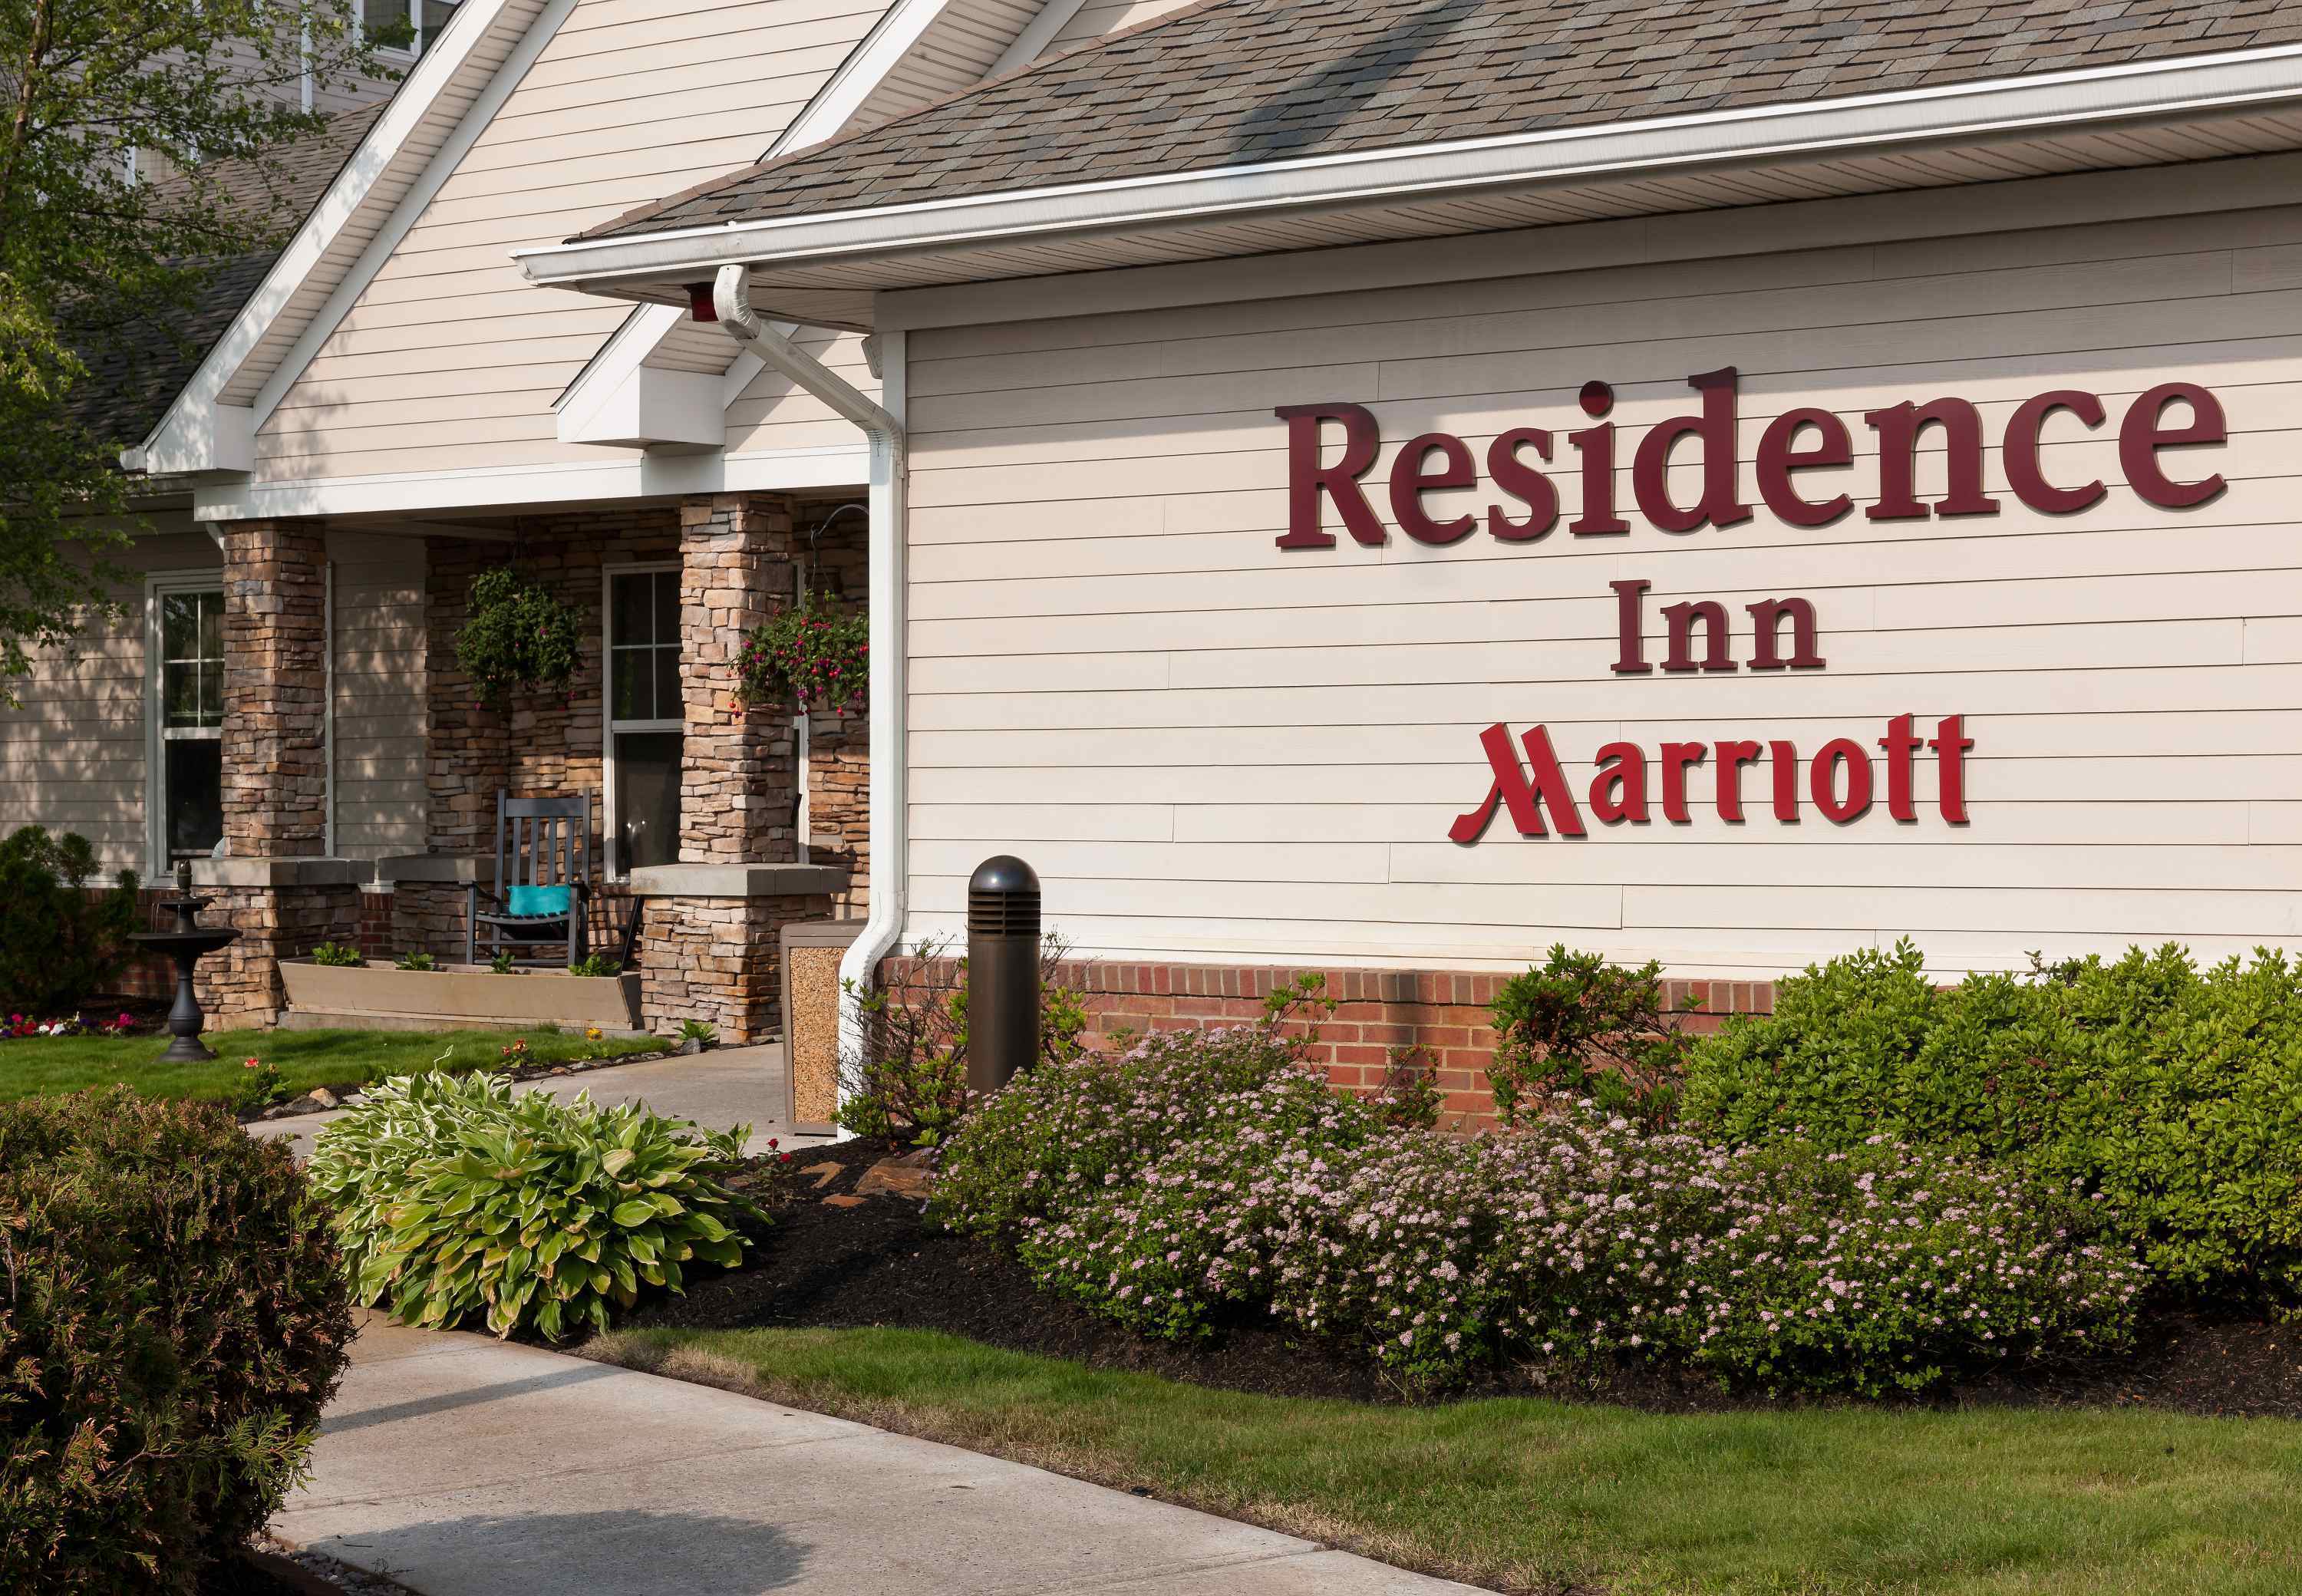 Photo of Residence Inn Boston Marlborough, Marlborough, MA